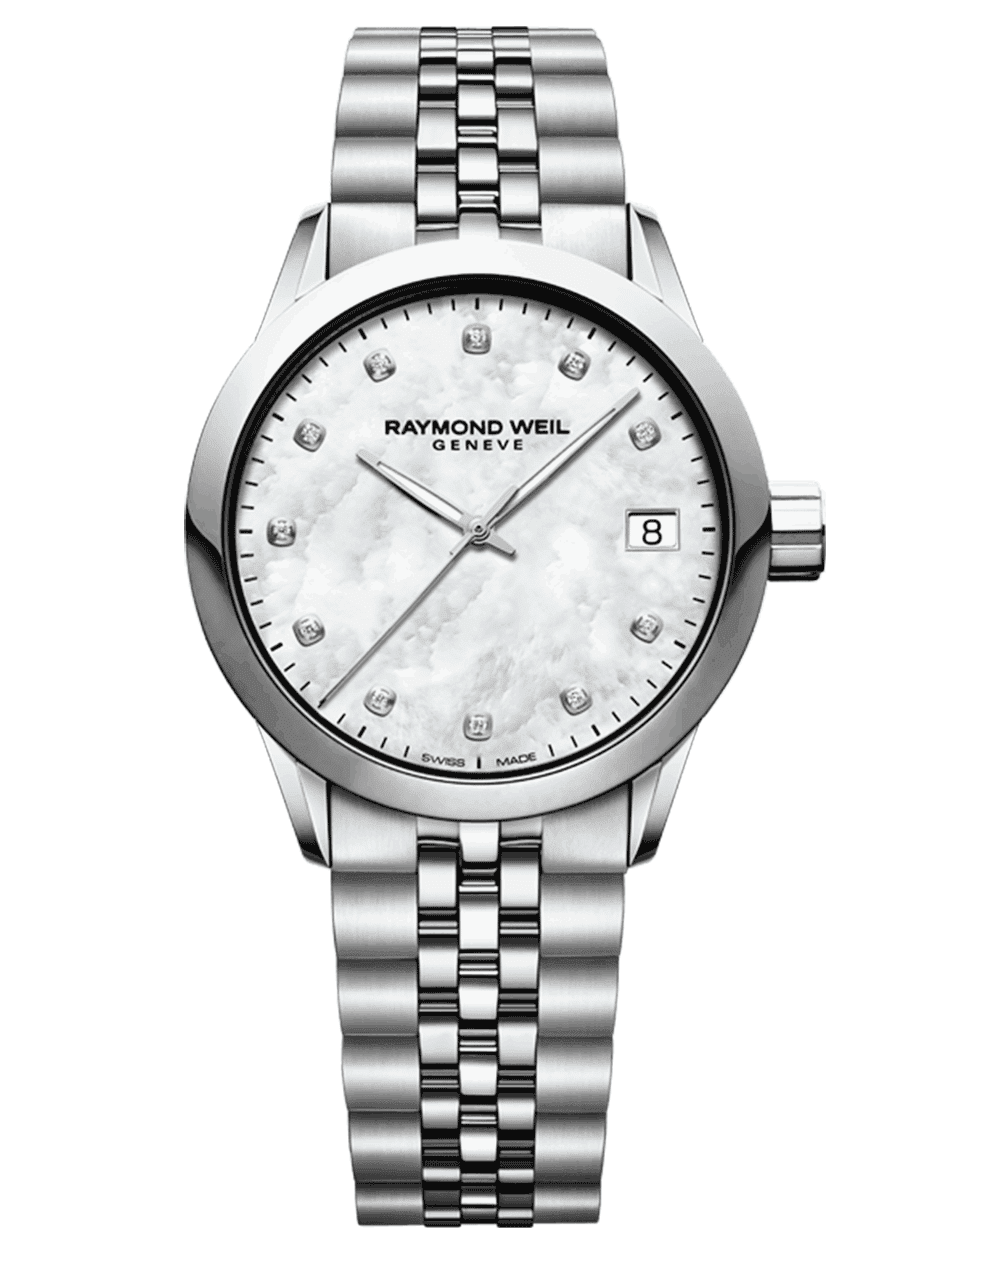 Imitation Luxury Watches